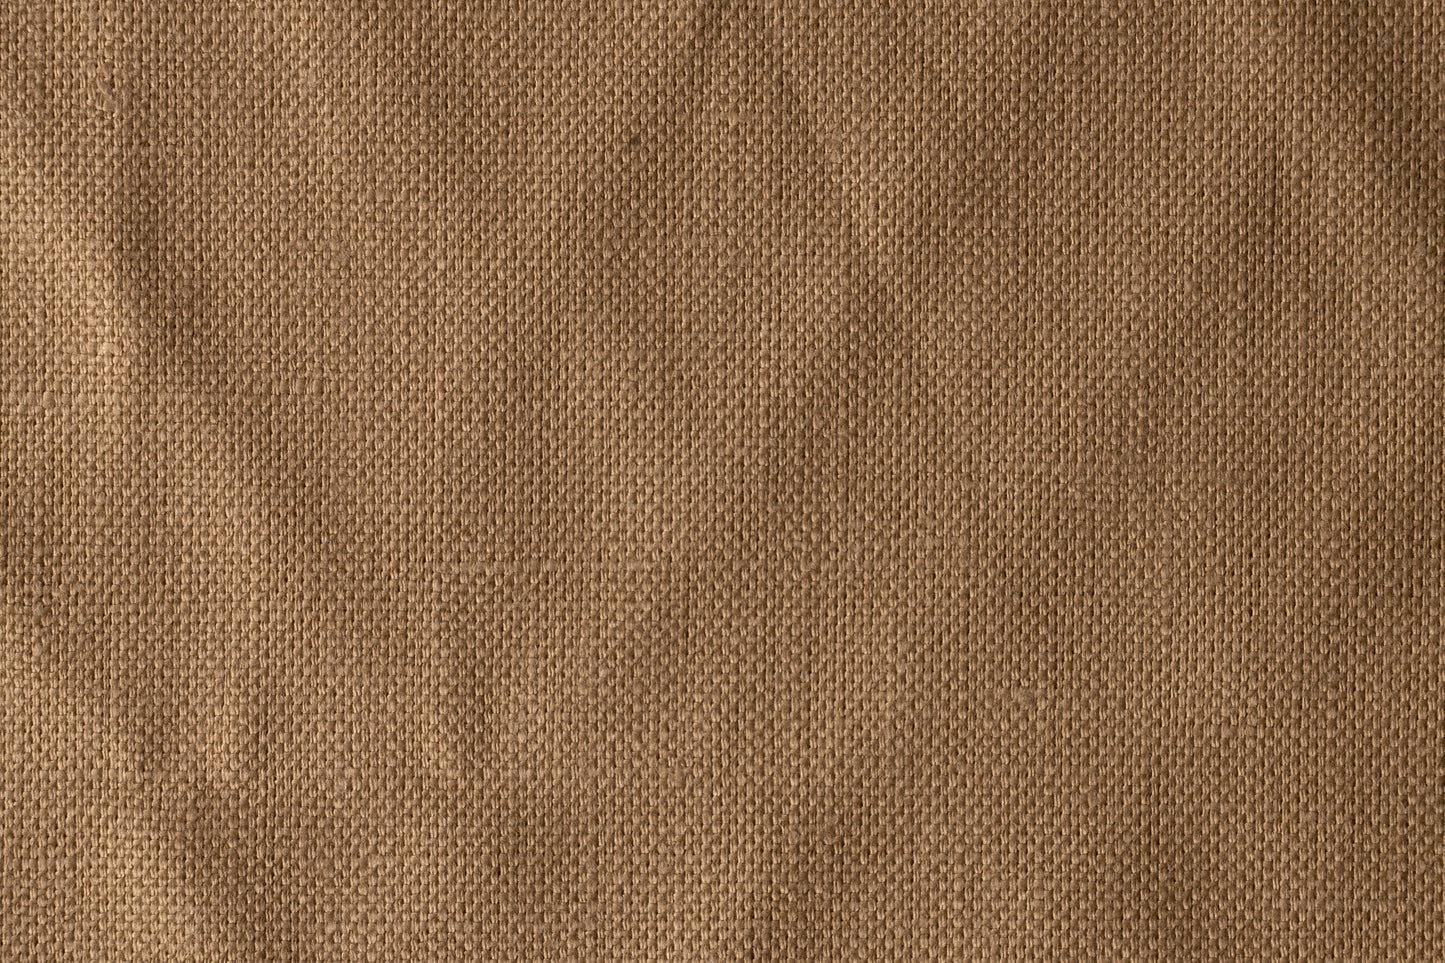 Home Furnishing Linen (11 oz/square yard) Swatch